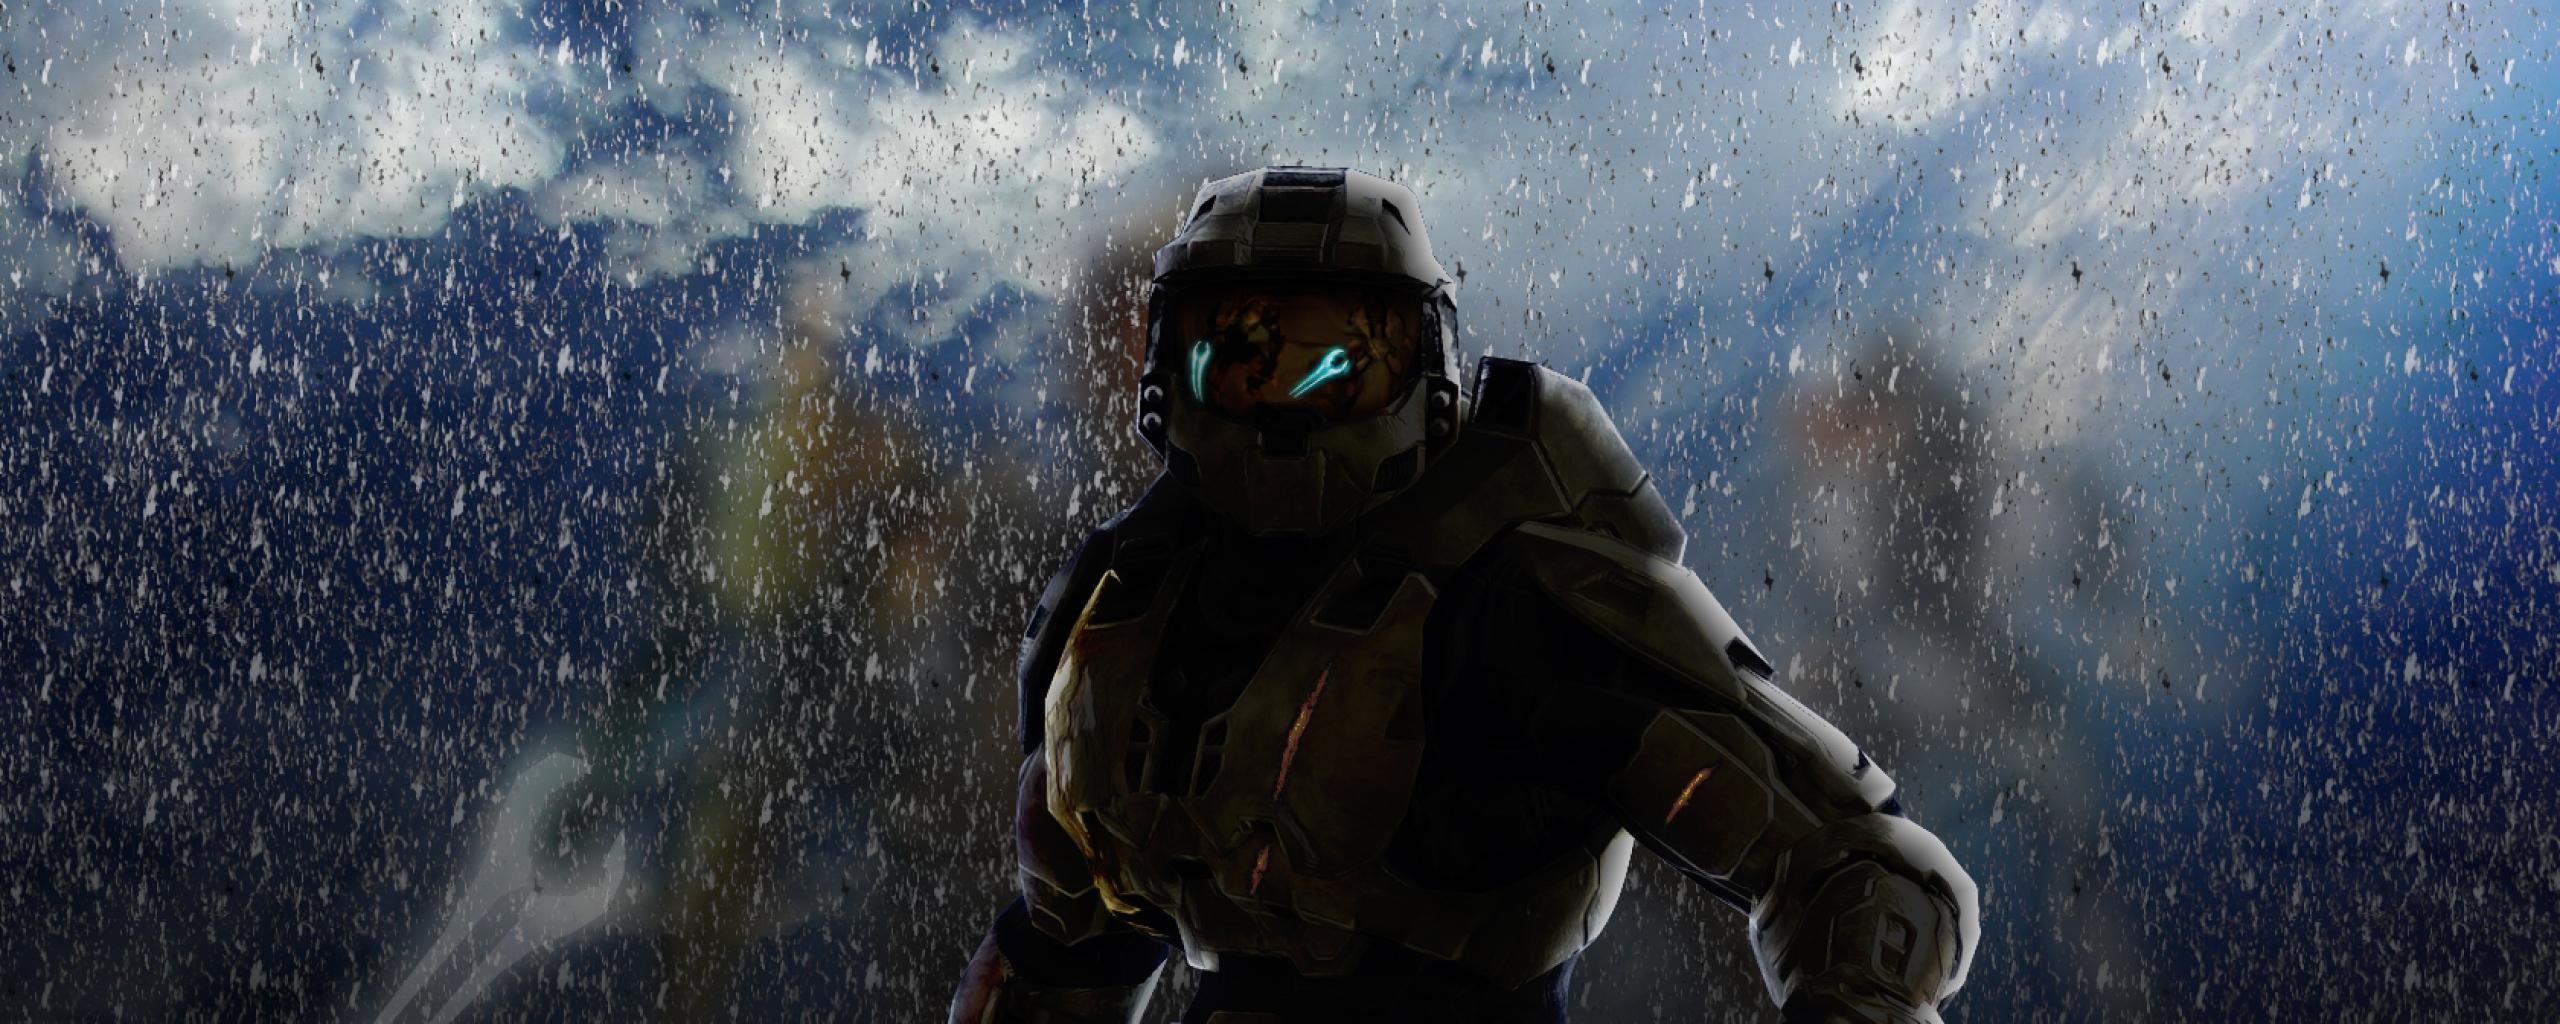 Wallpaper Halo Soldier Armor Look Dual Monitor